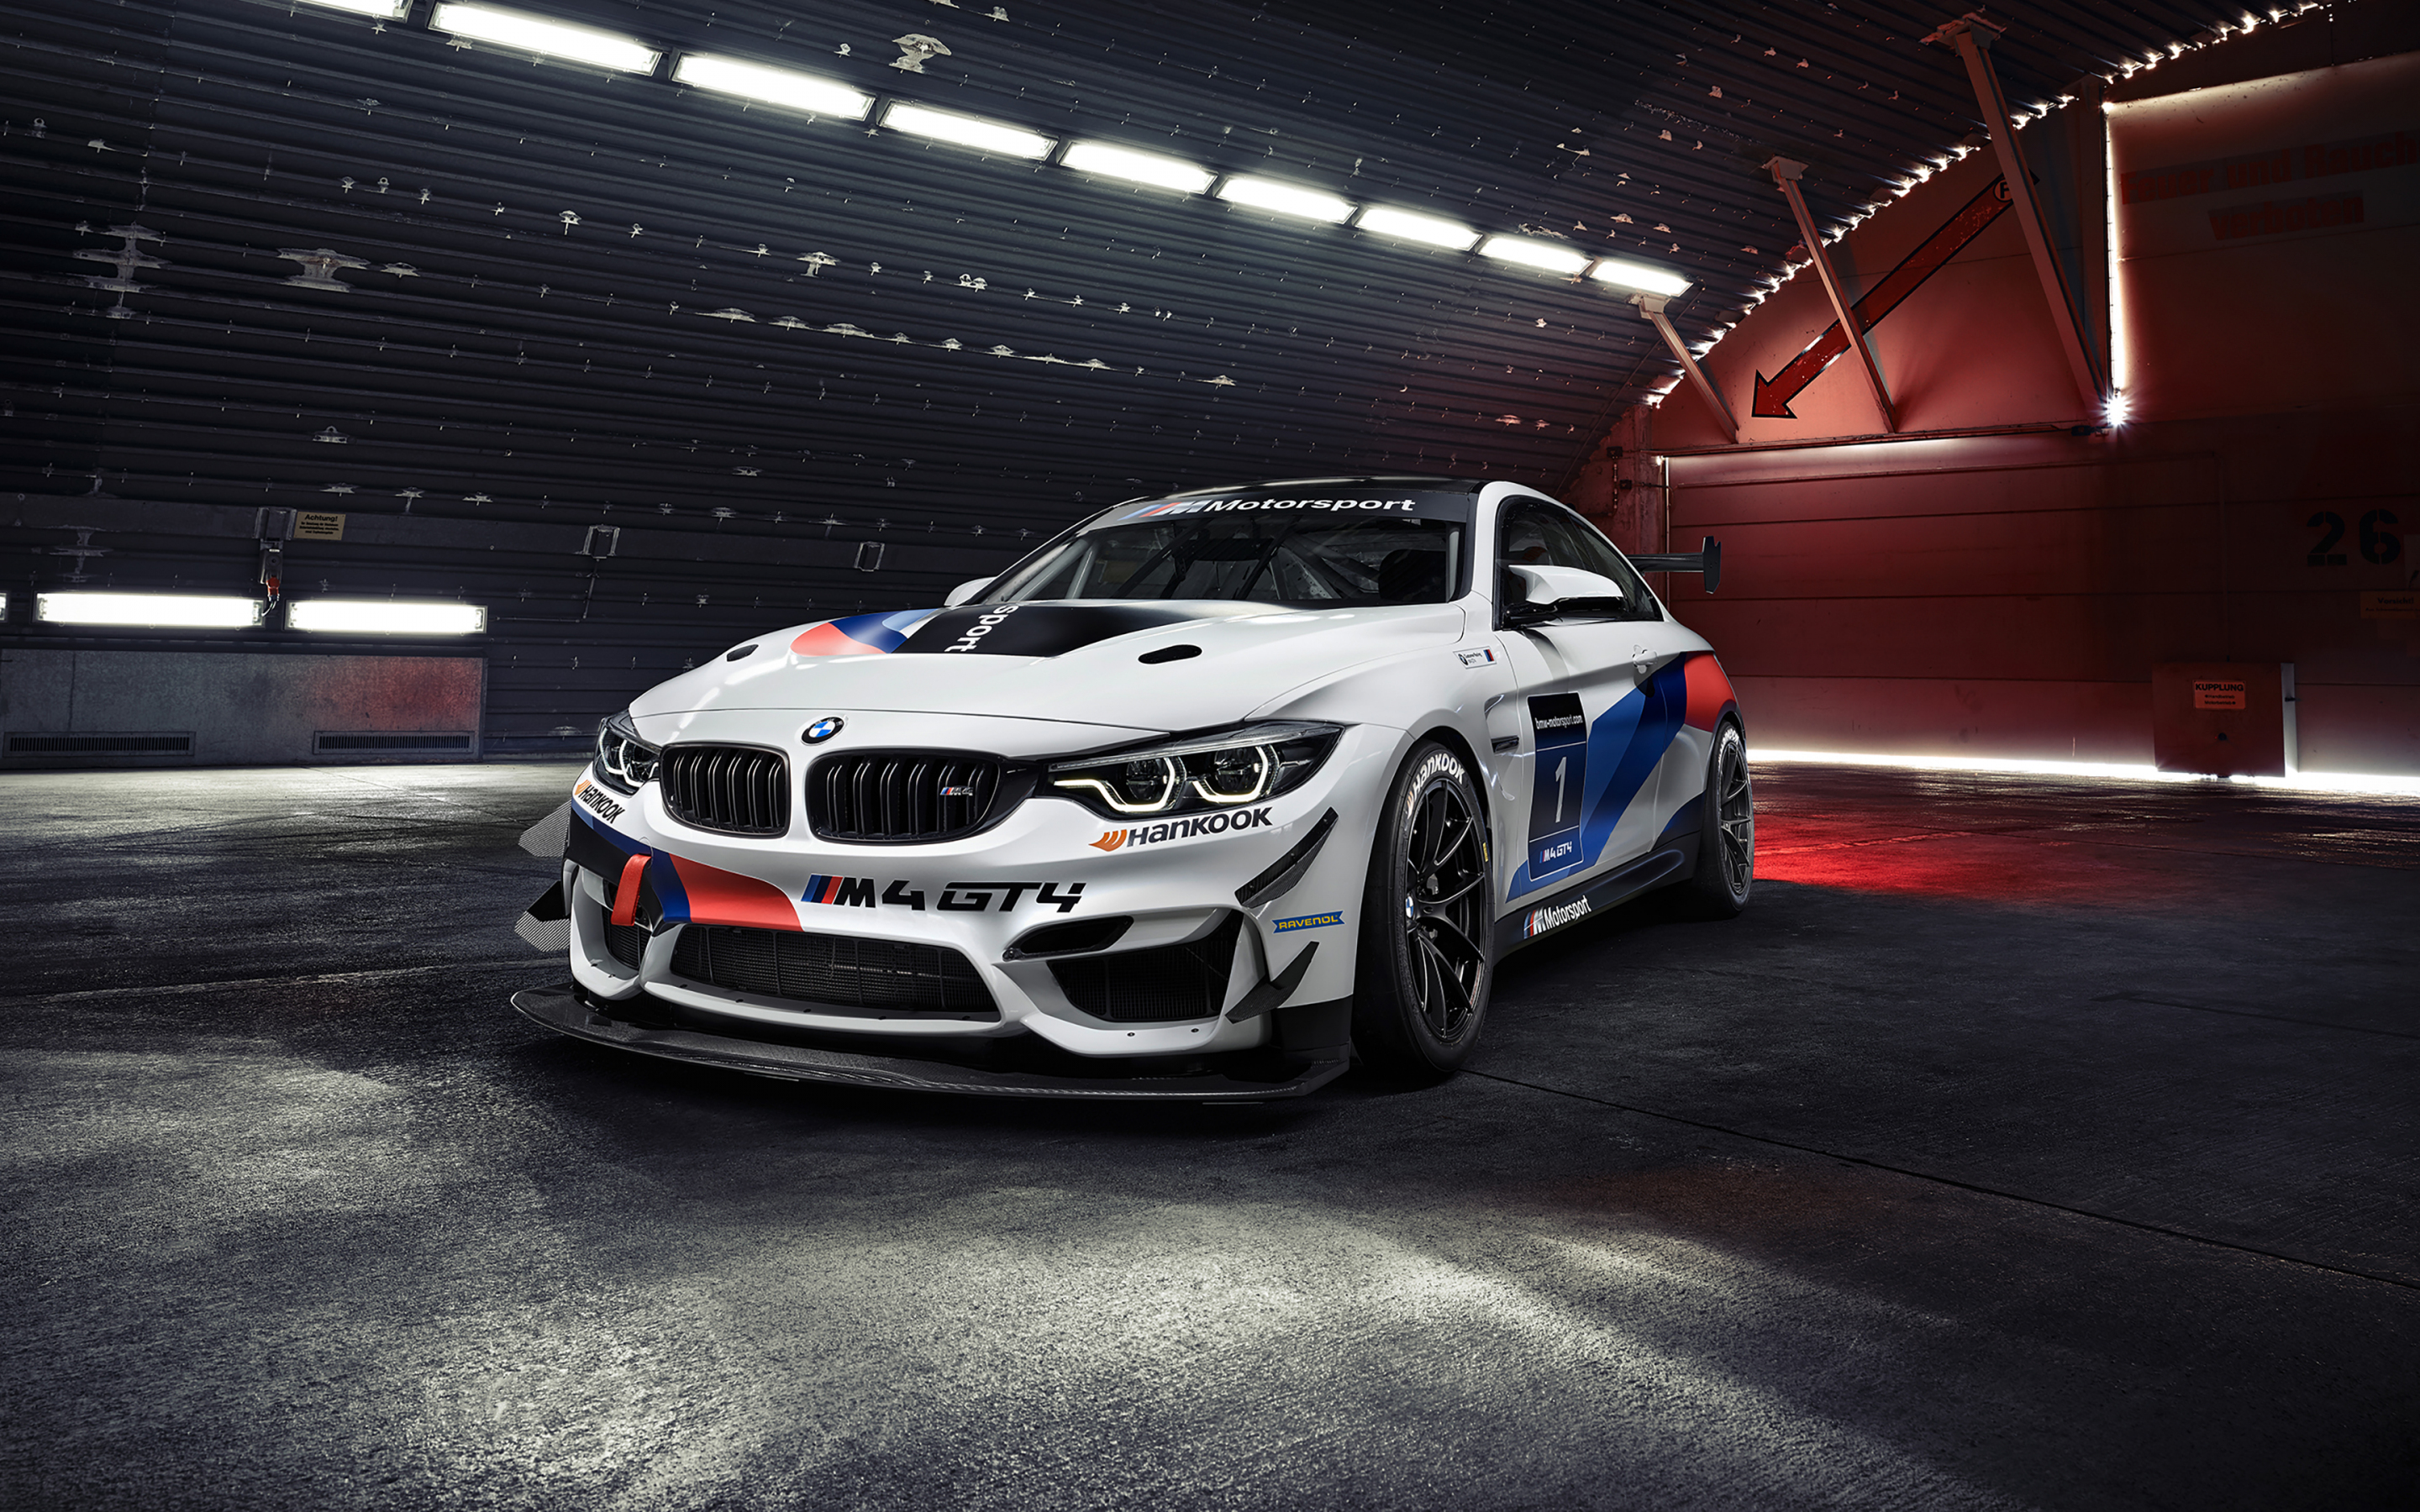 Luxury car, front-view, BMW M4 GT4, 2880x1800 wallpaper